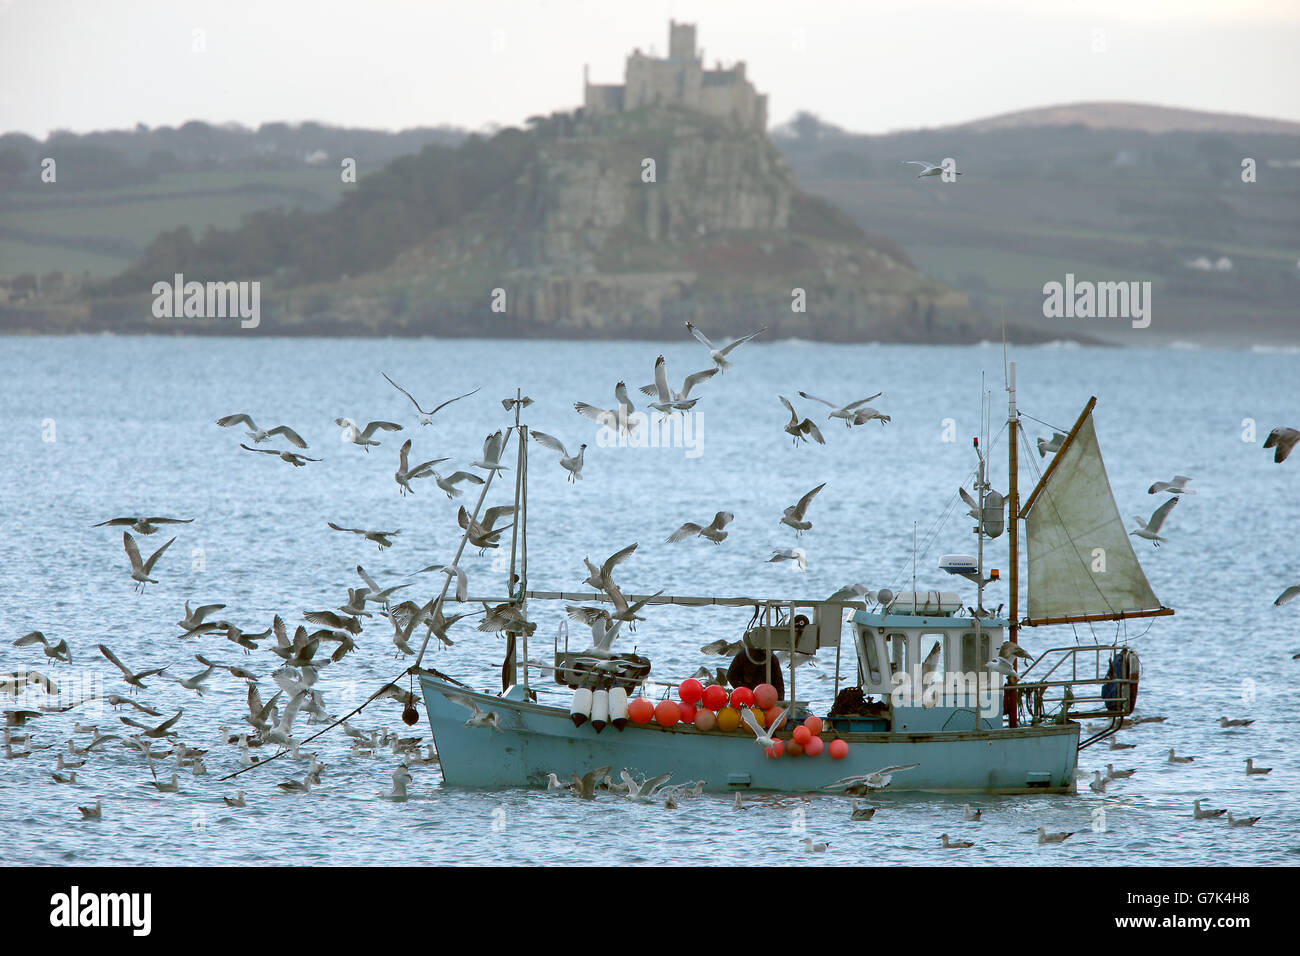 Gulls around a small fishing boat, Mount's Bay, Cornwall, England, UK. Stock Photo